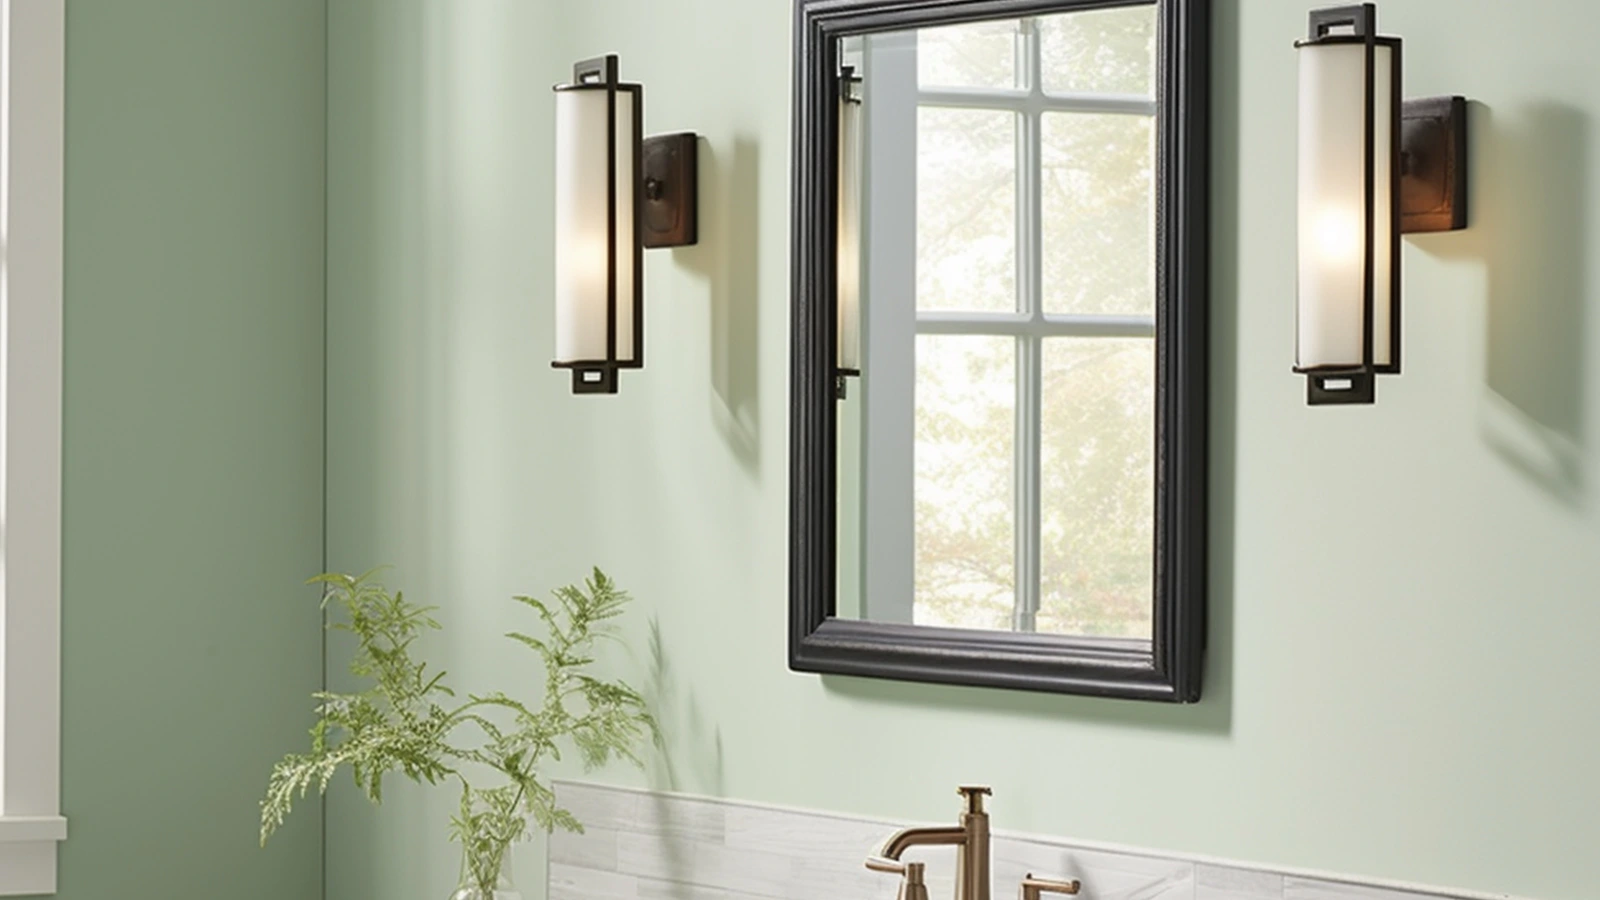 Sage green bathroom decor ideas: A bathroom with green walls and a mirror.